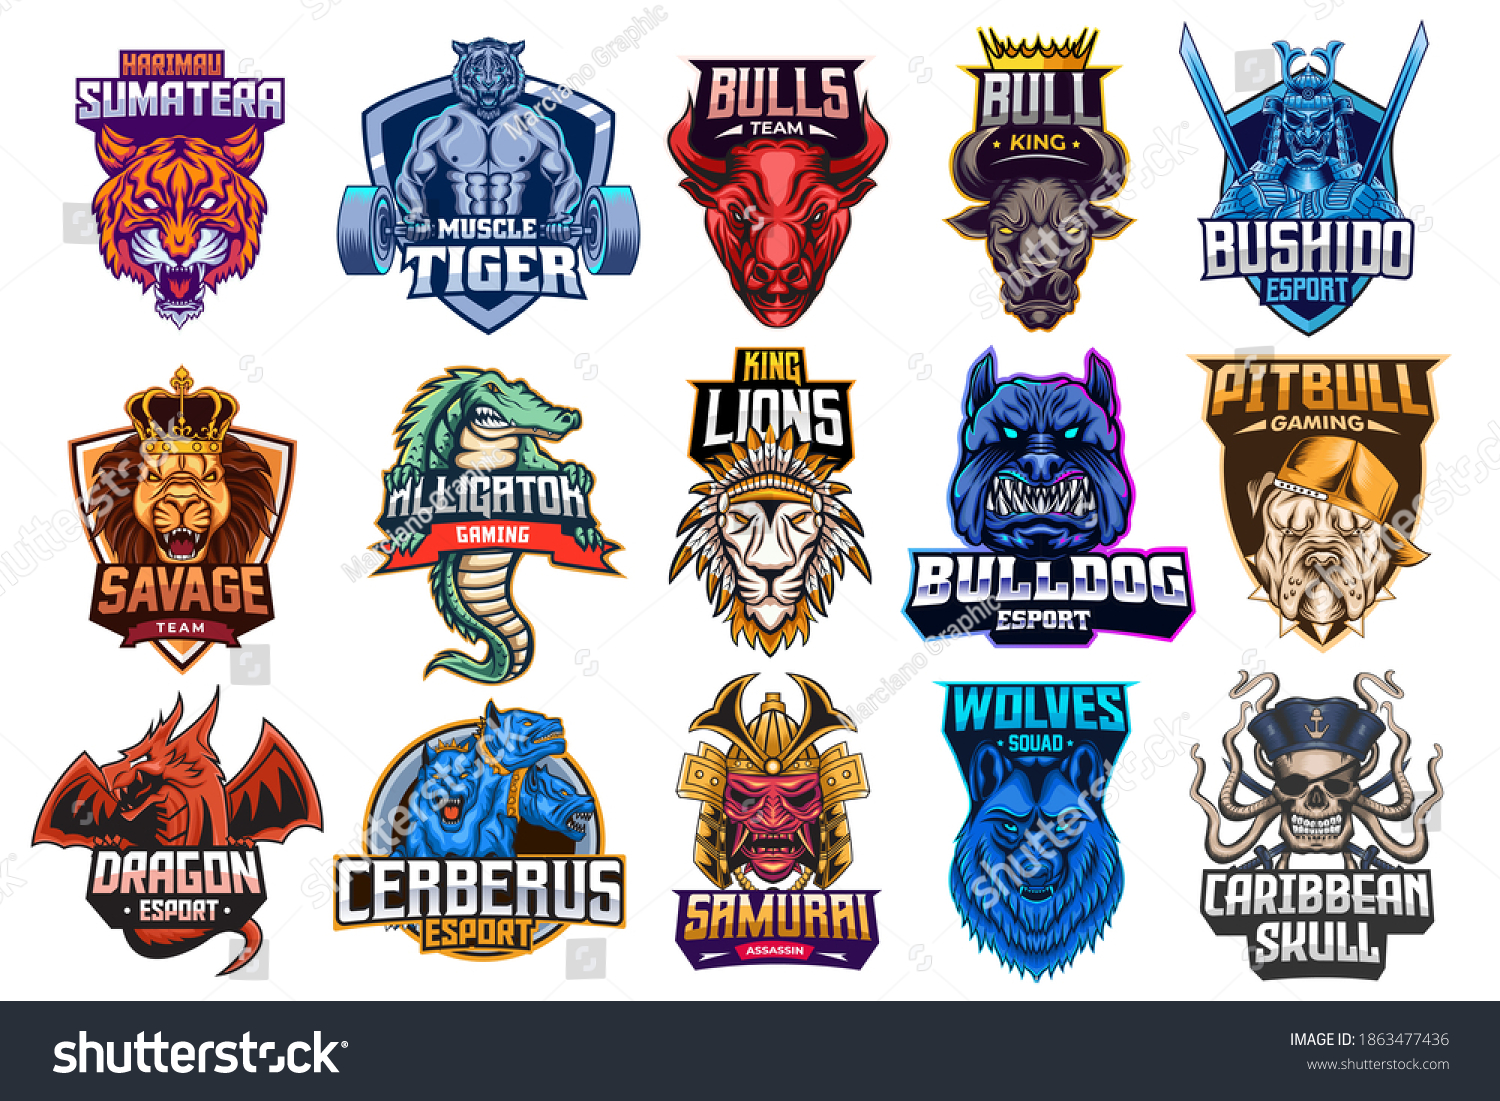 SVG of Collection of emblems of tiger, bulls, lion, alligator, samurai, bulldog, wolves, dragon, cerberus, skull. Colorful set, vector illustration svg